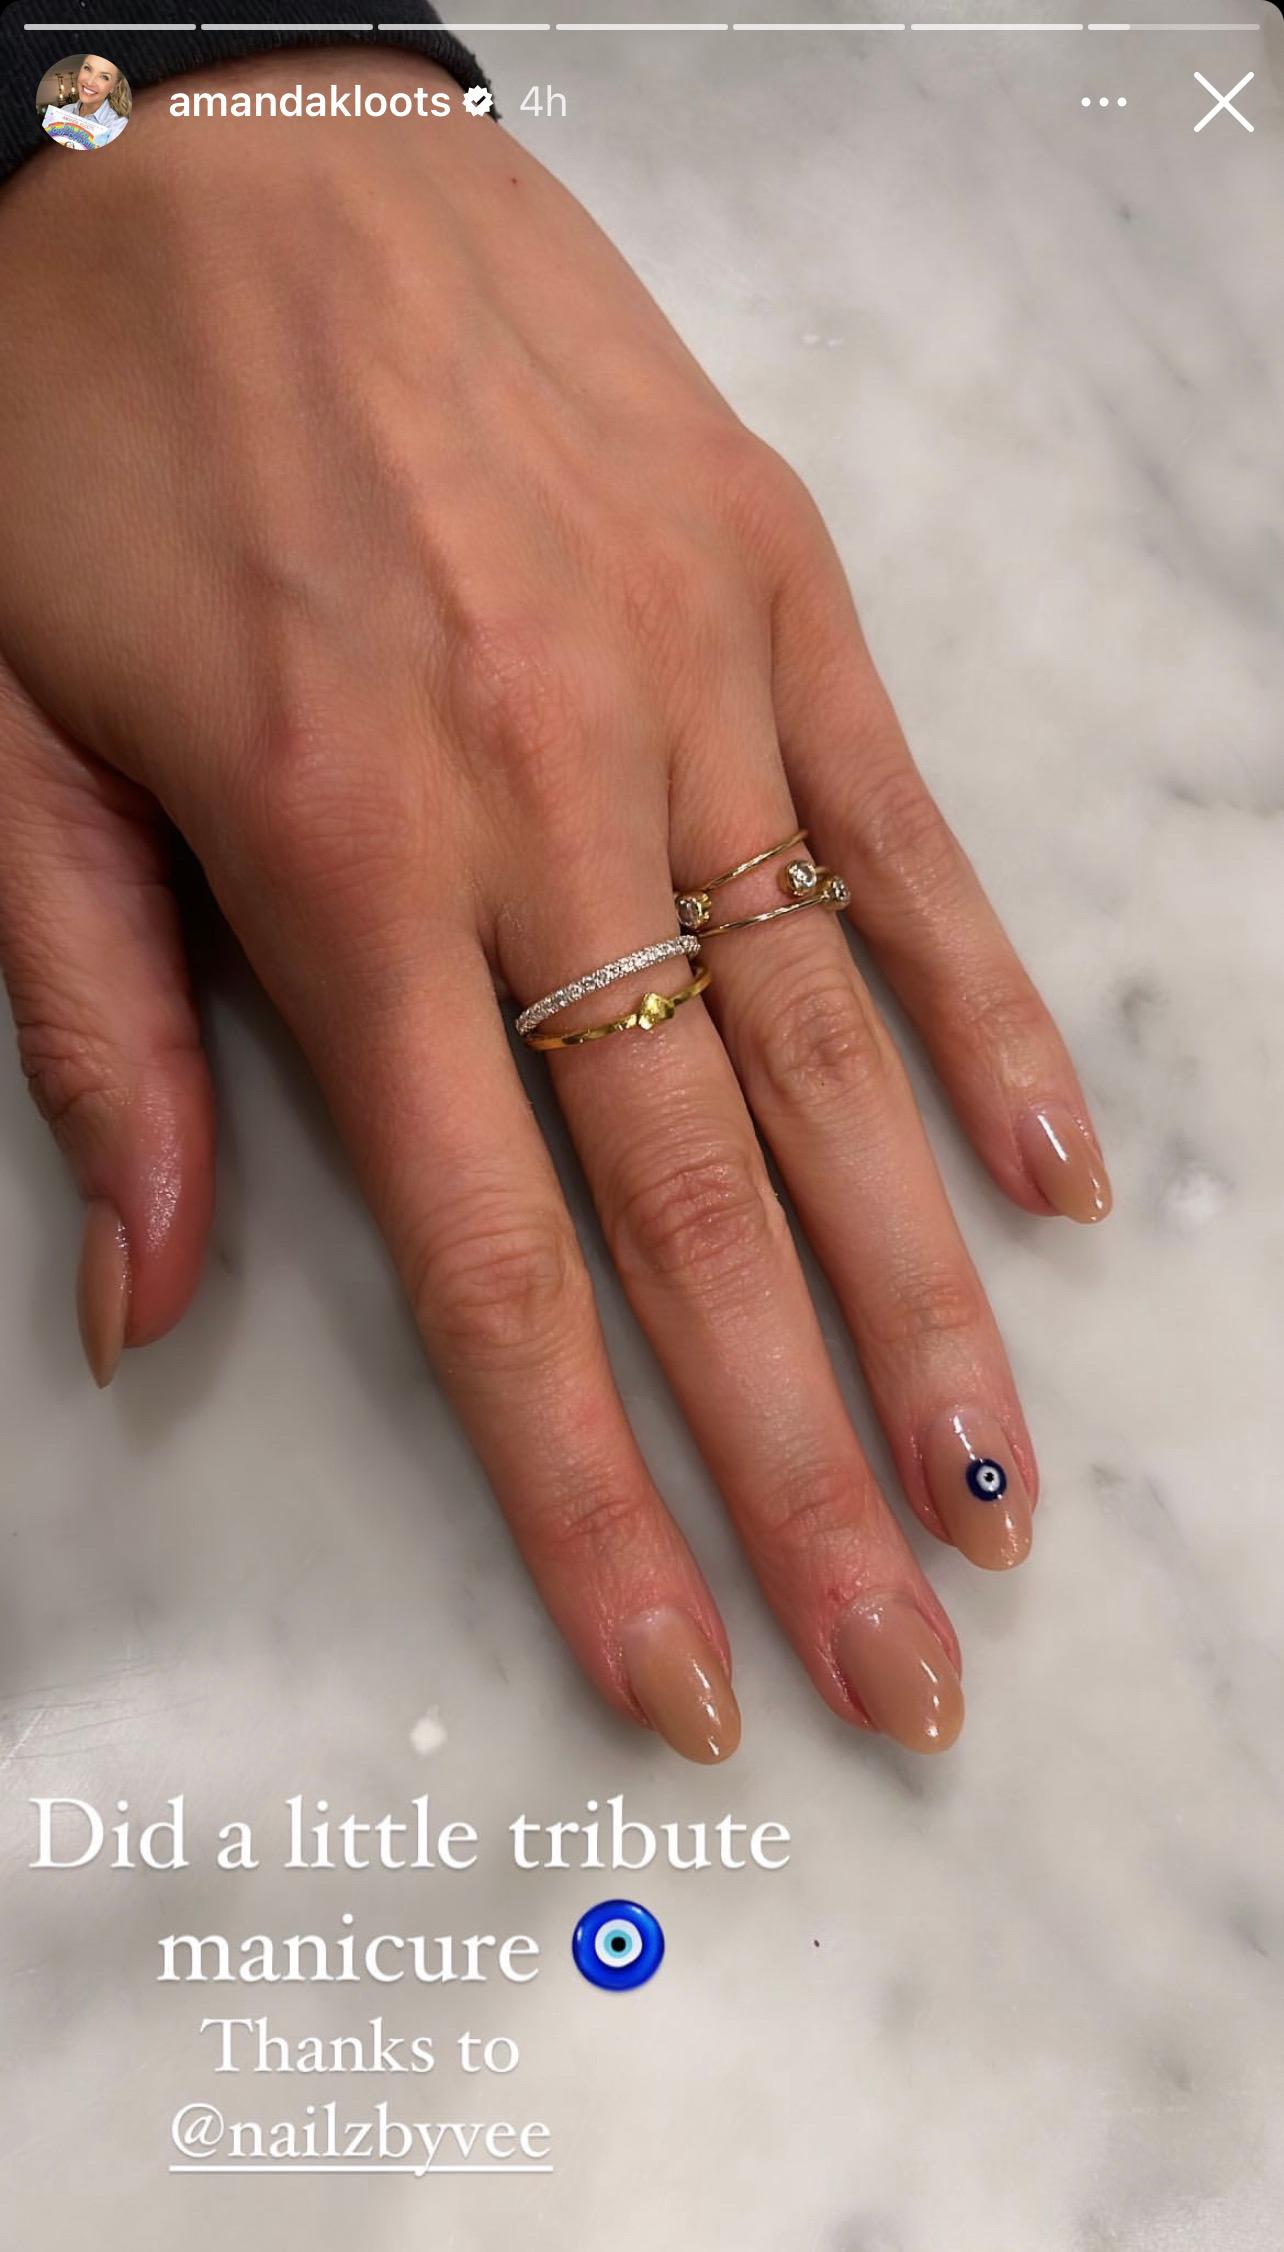 Amanda Kloots Marks Late Husband's Proposal Anniversary With Manicure Tribute